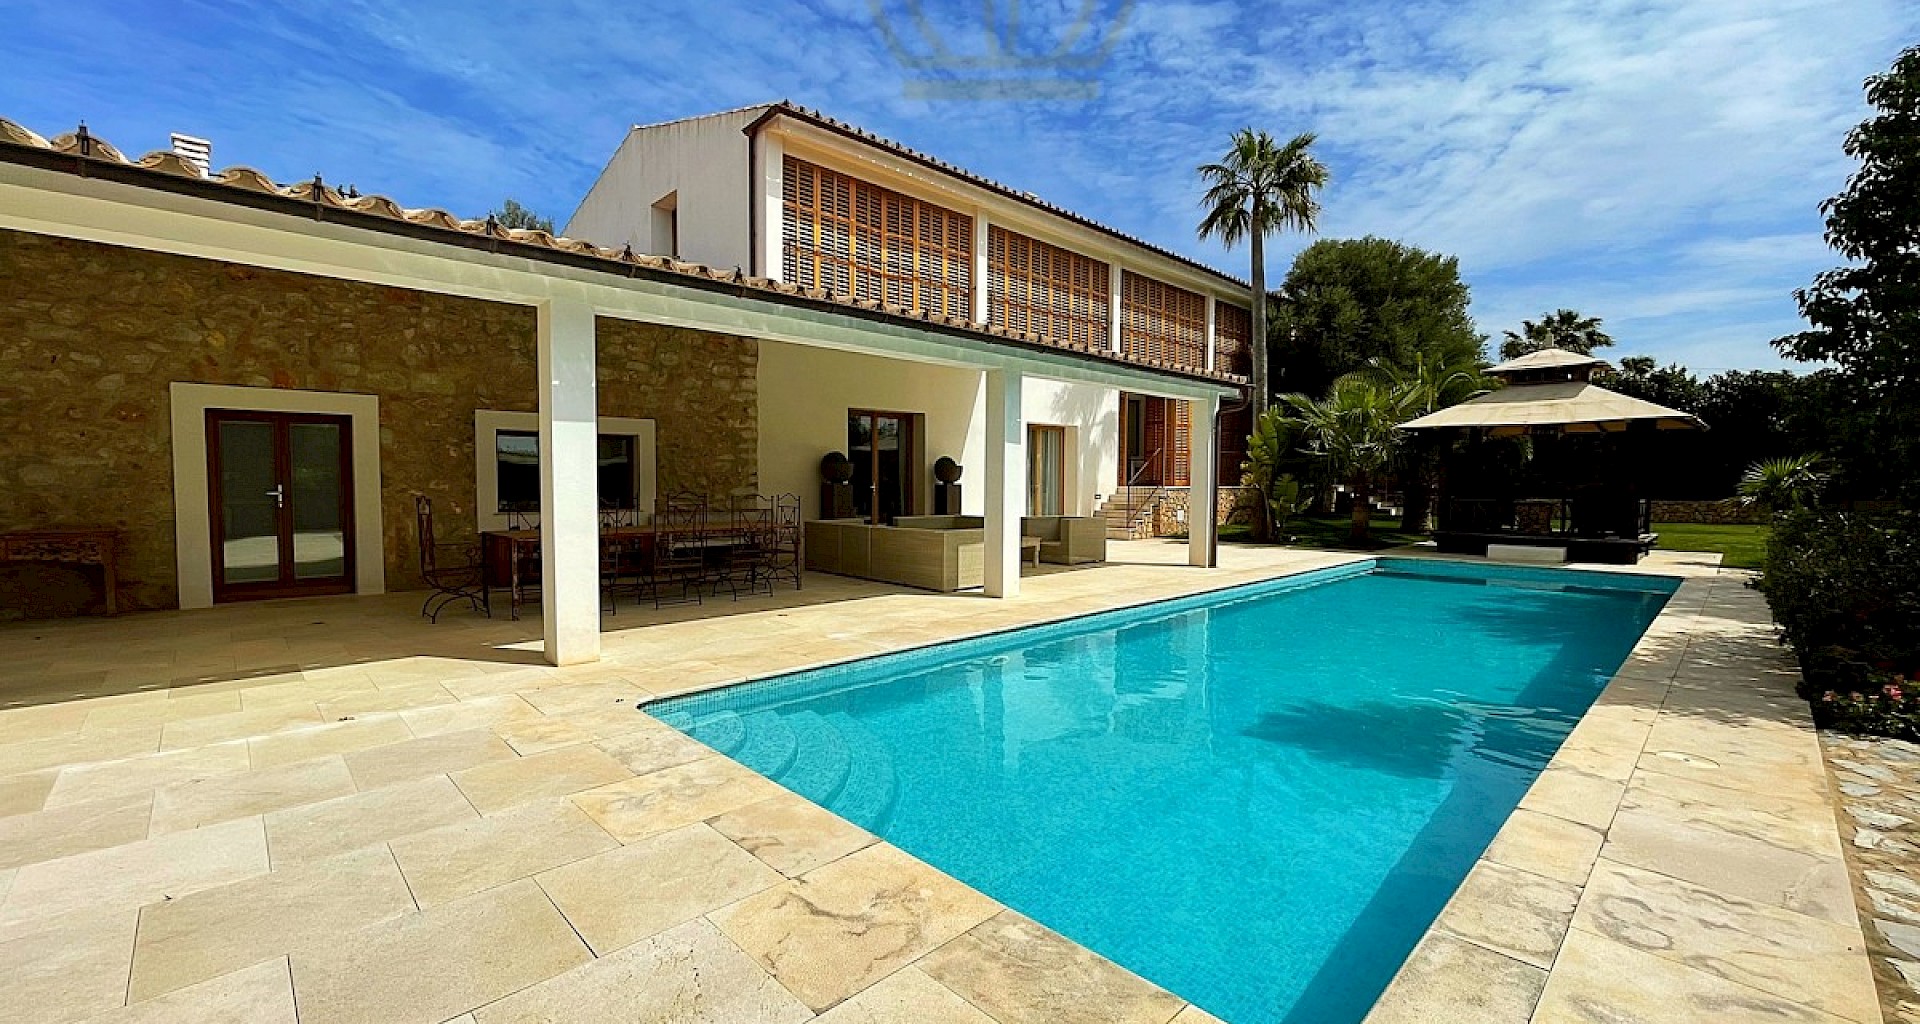 KROHN & LUEDEMANN Villa mediterránea señorial en Calvia Villa Calvia Pool